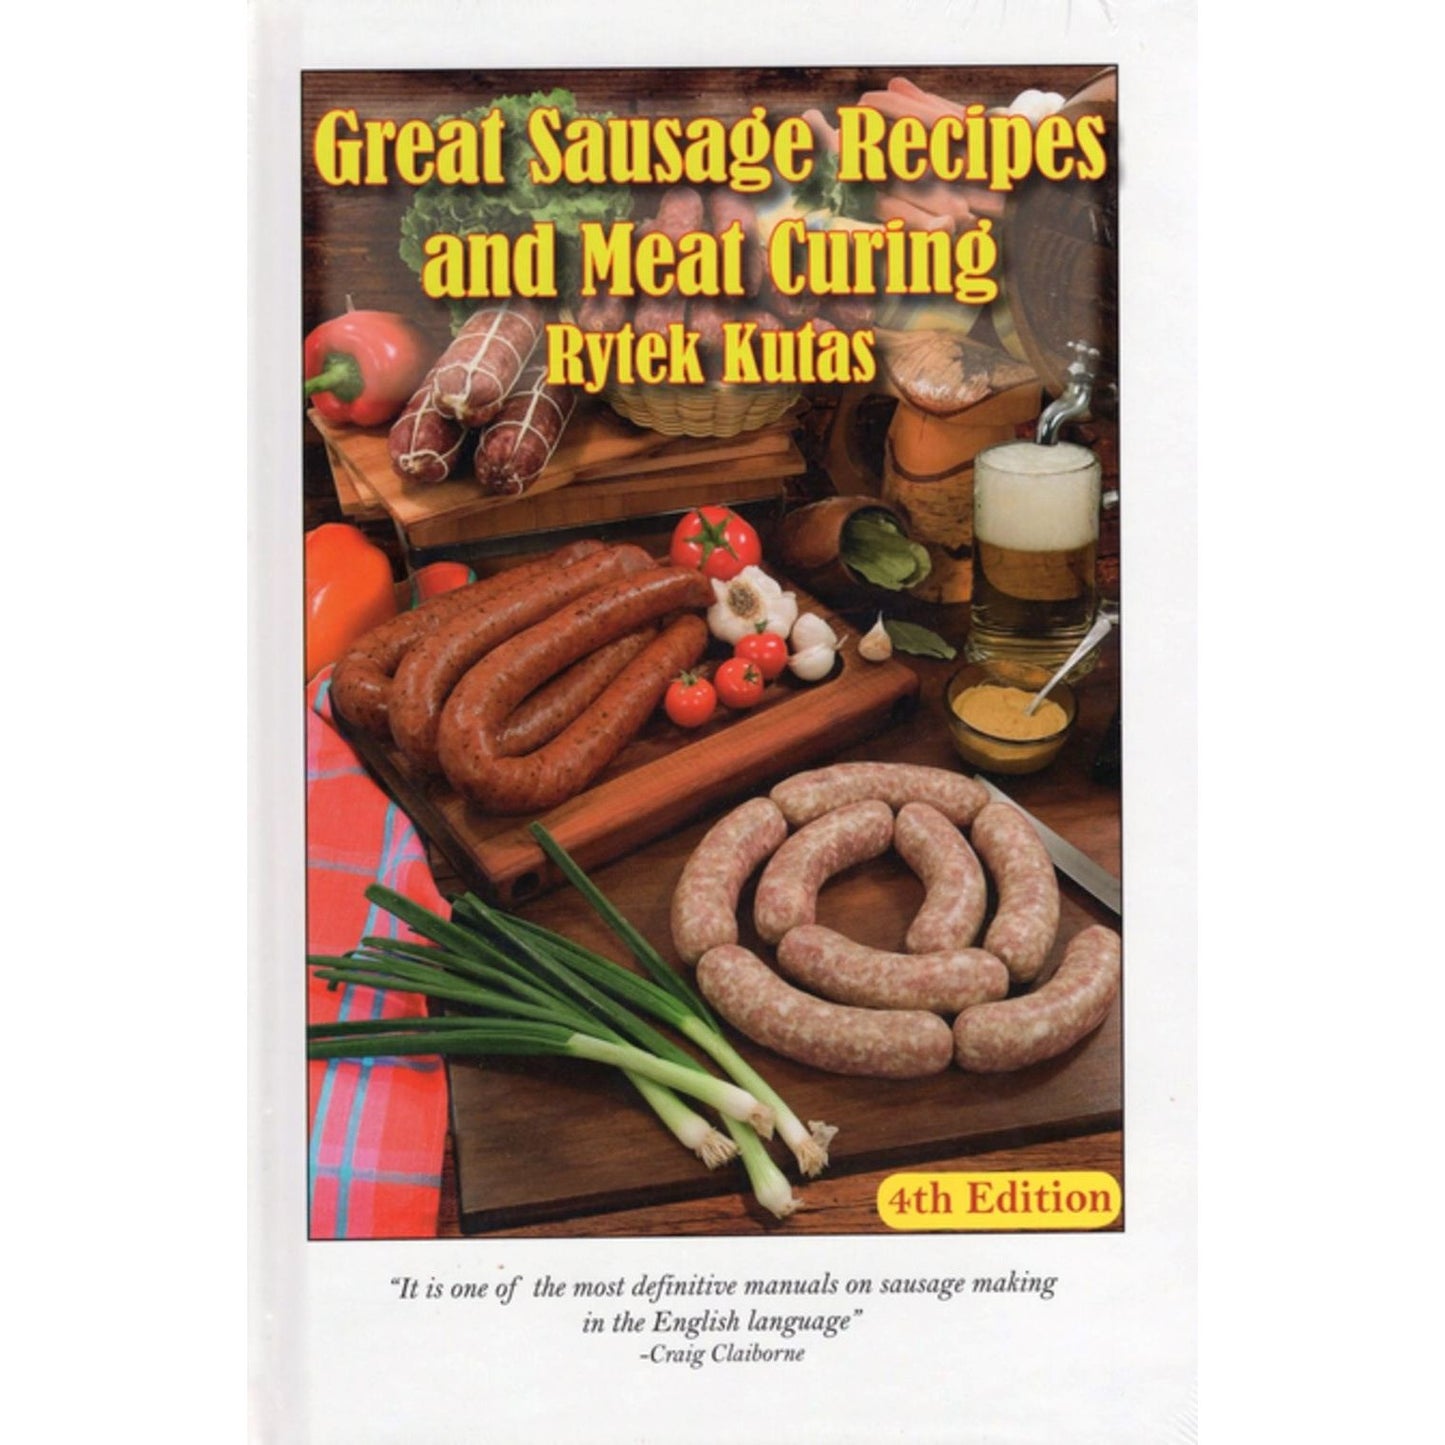 Great Sausage Recipes and Meat Curing (Rytek Kutas)